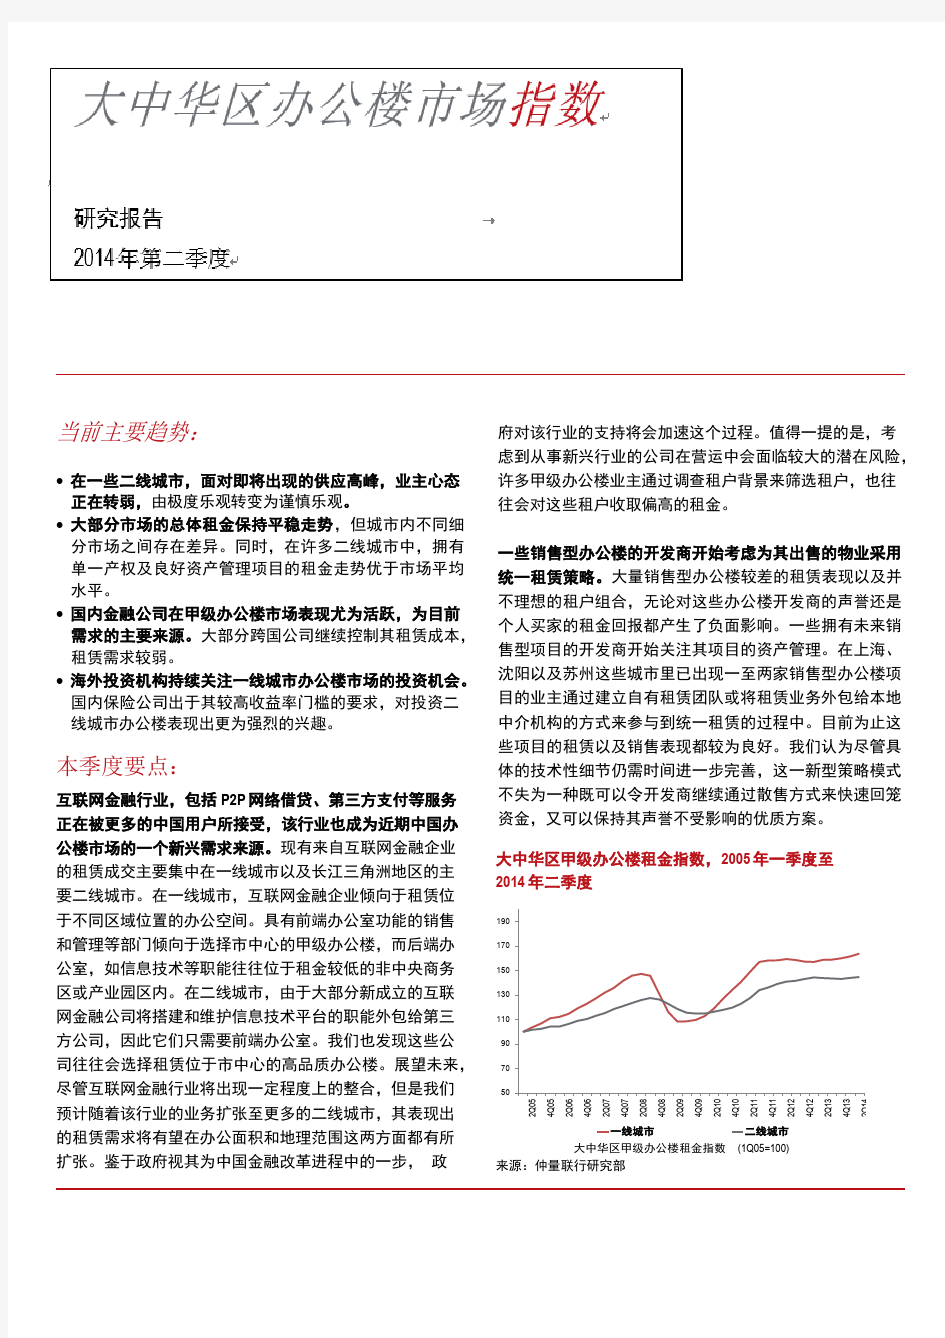 JLL 14Q2 GC Office Index CN-仲量联行-大中华-北京-写字楼-房地产-市场调研-研究分析-报告